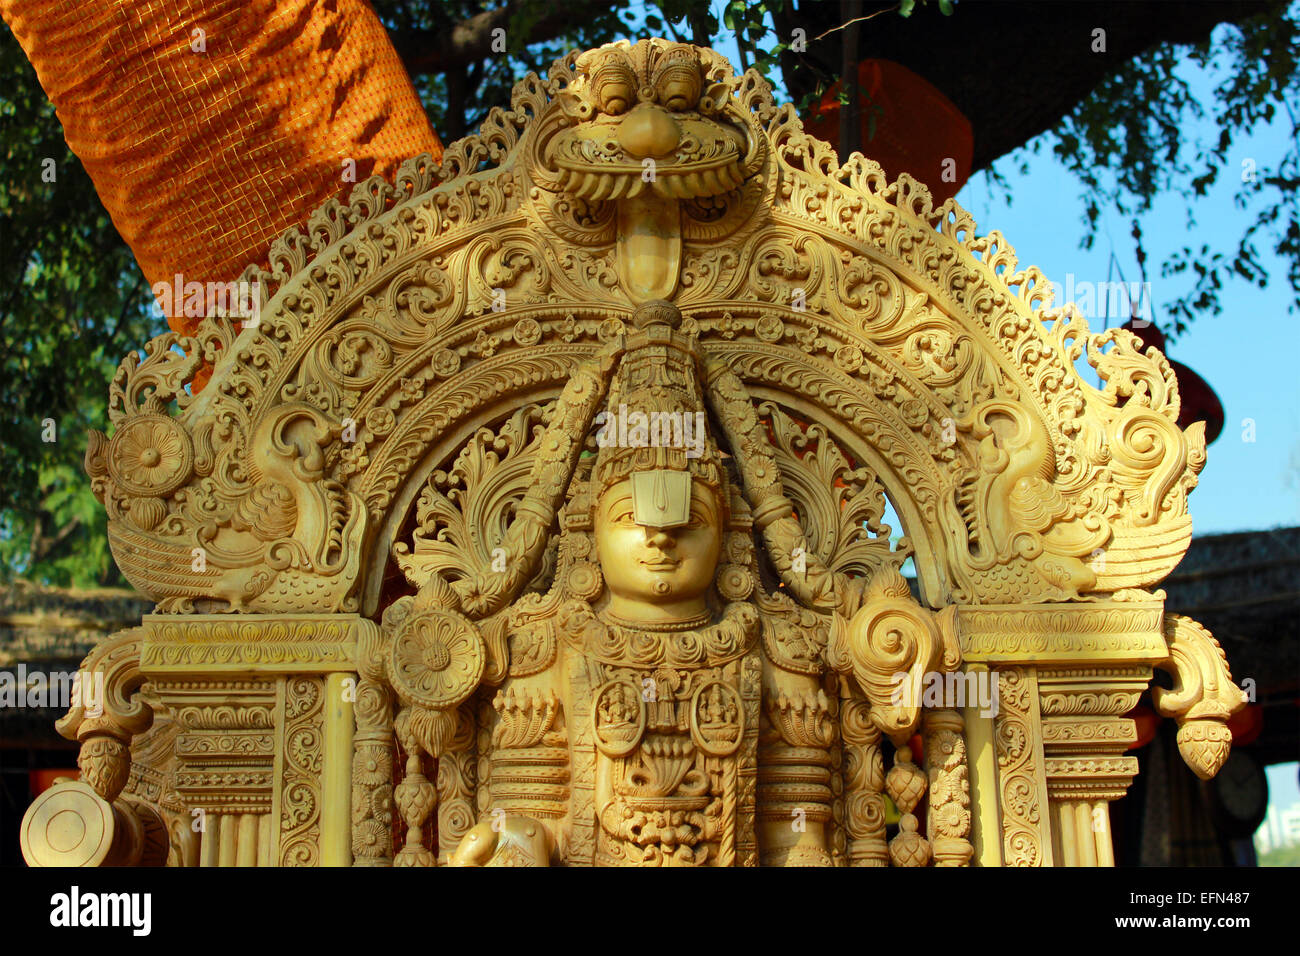 god, sri, vishnu, indian, goddess, lanka, hindu, lord, many, sculpture, carving, statue, east, wall, architecture, temple. wood Stock Photo